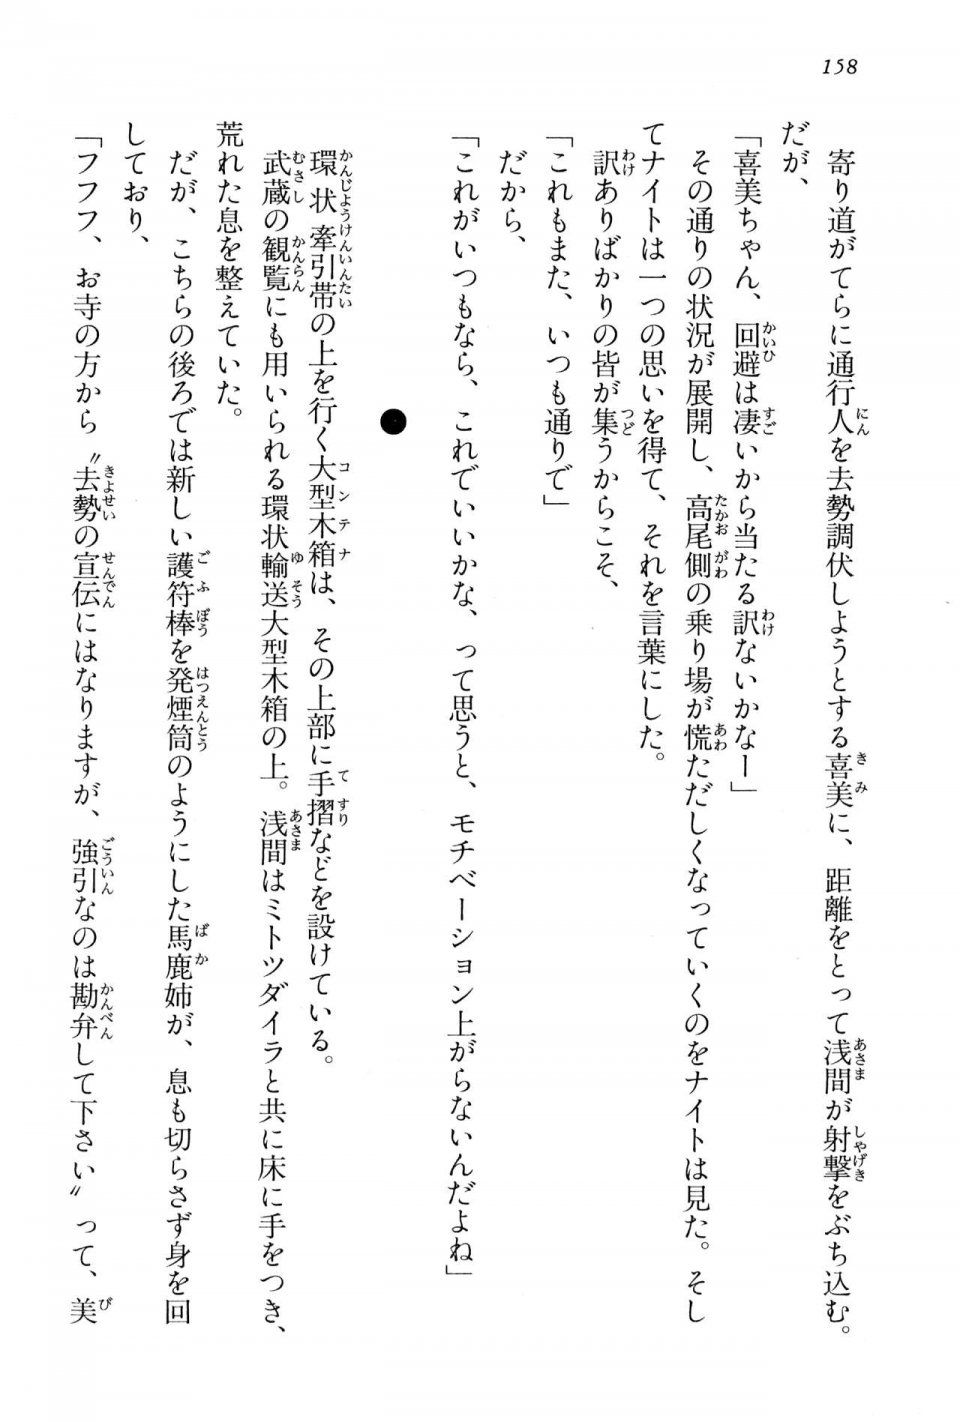 Kyoukai Senjou no Horizon BD Special Mininovel Vol 2(1B) - Photo #162